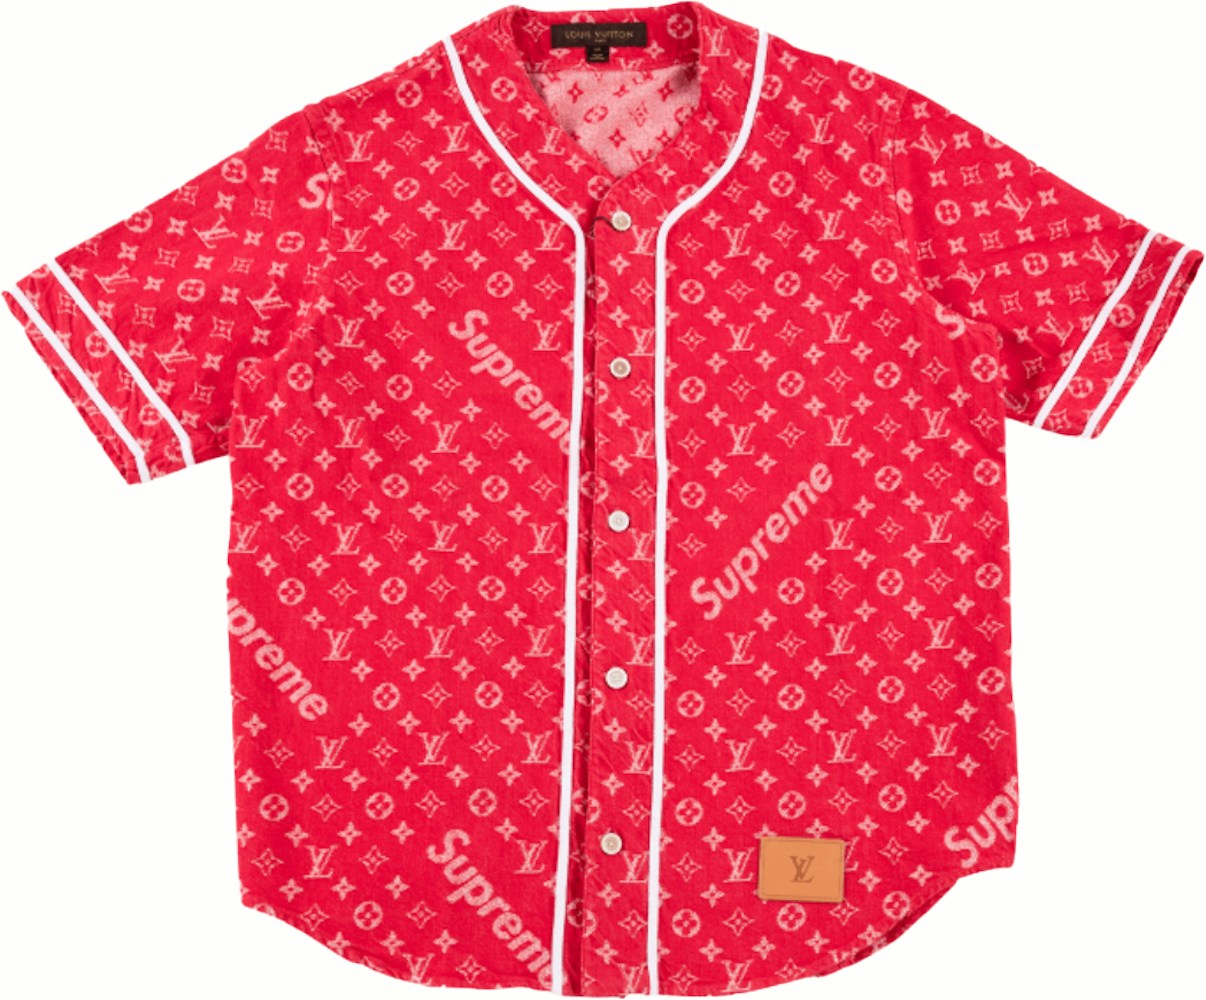 Supreme x Vuitton Jacquard Denim Baseball Jersey Red - SS17